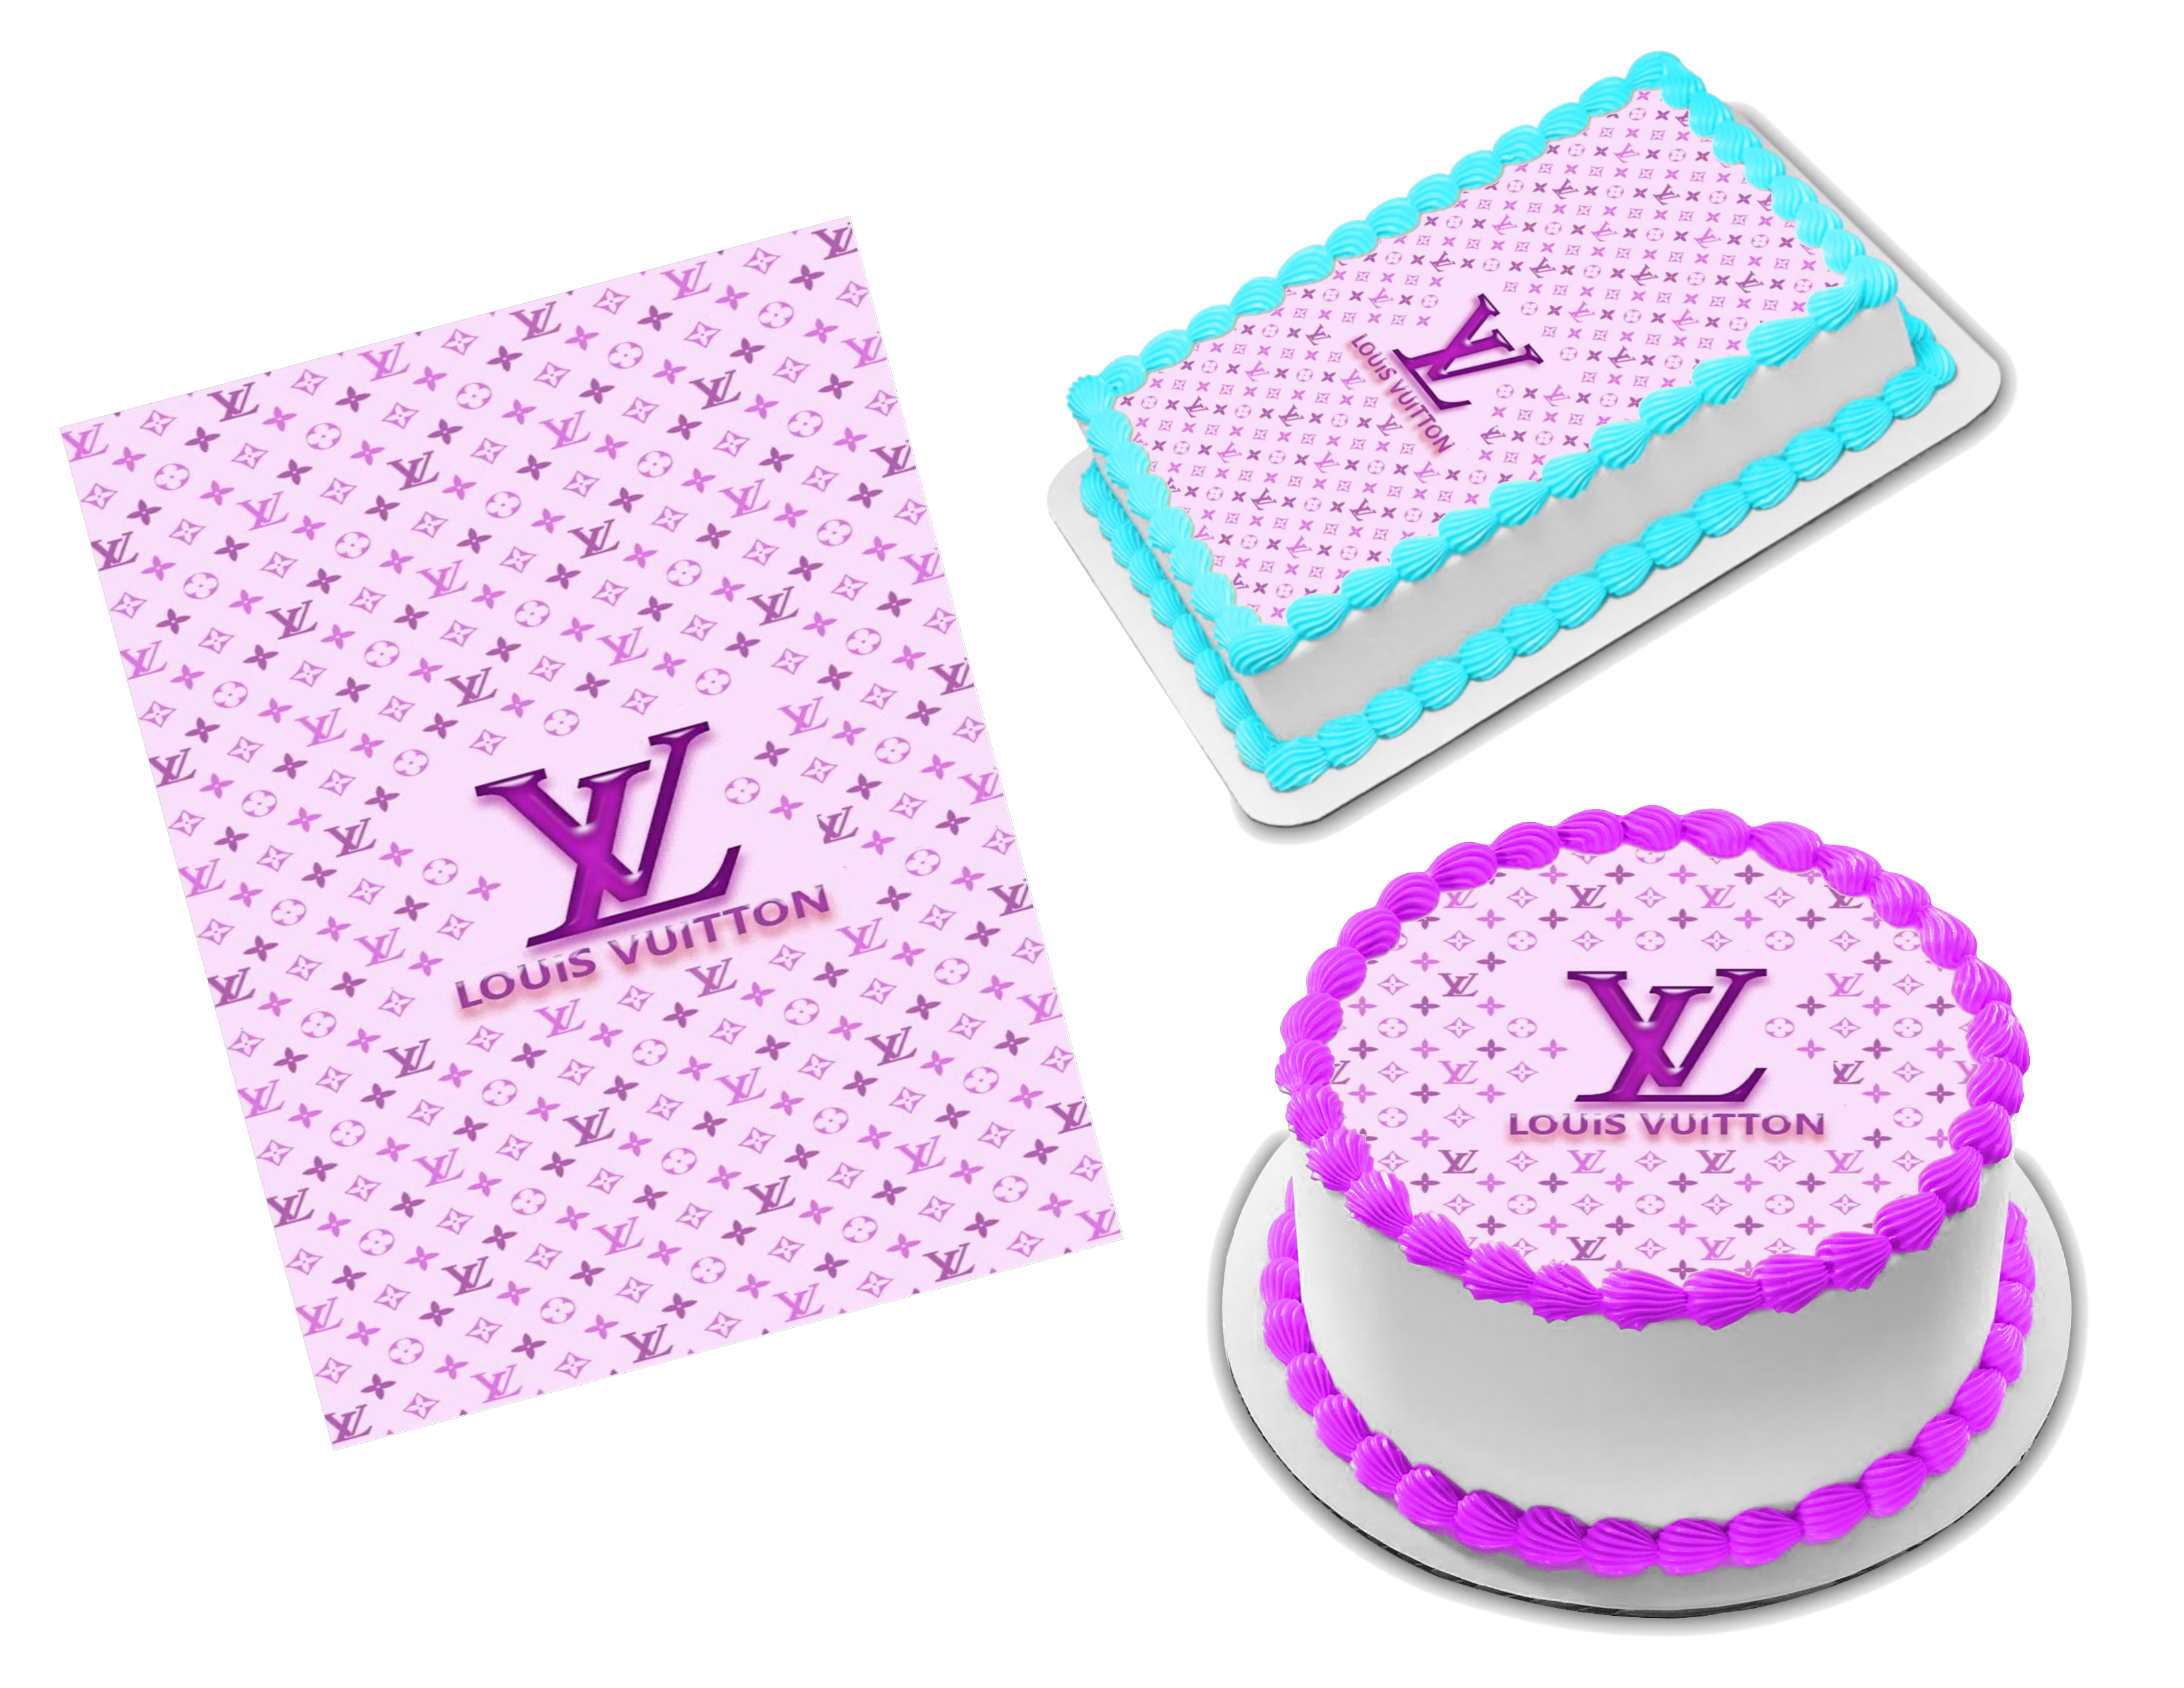 Louis Vuitton Purple Edible Image Frosting Sheet #3 (70+ sizes